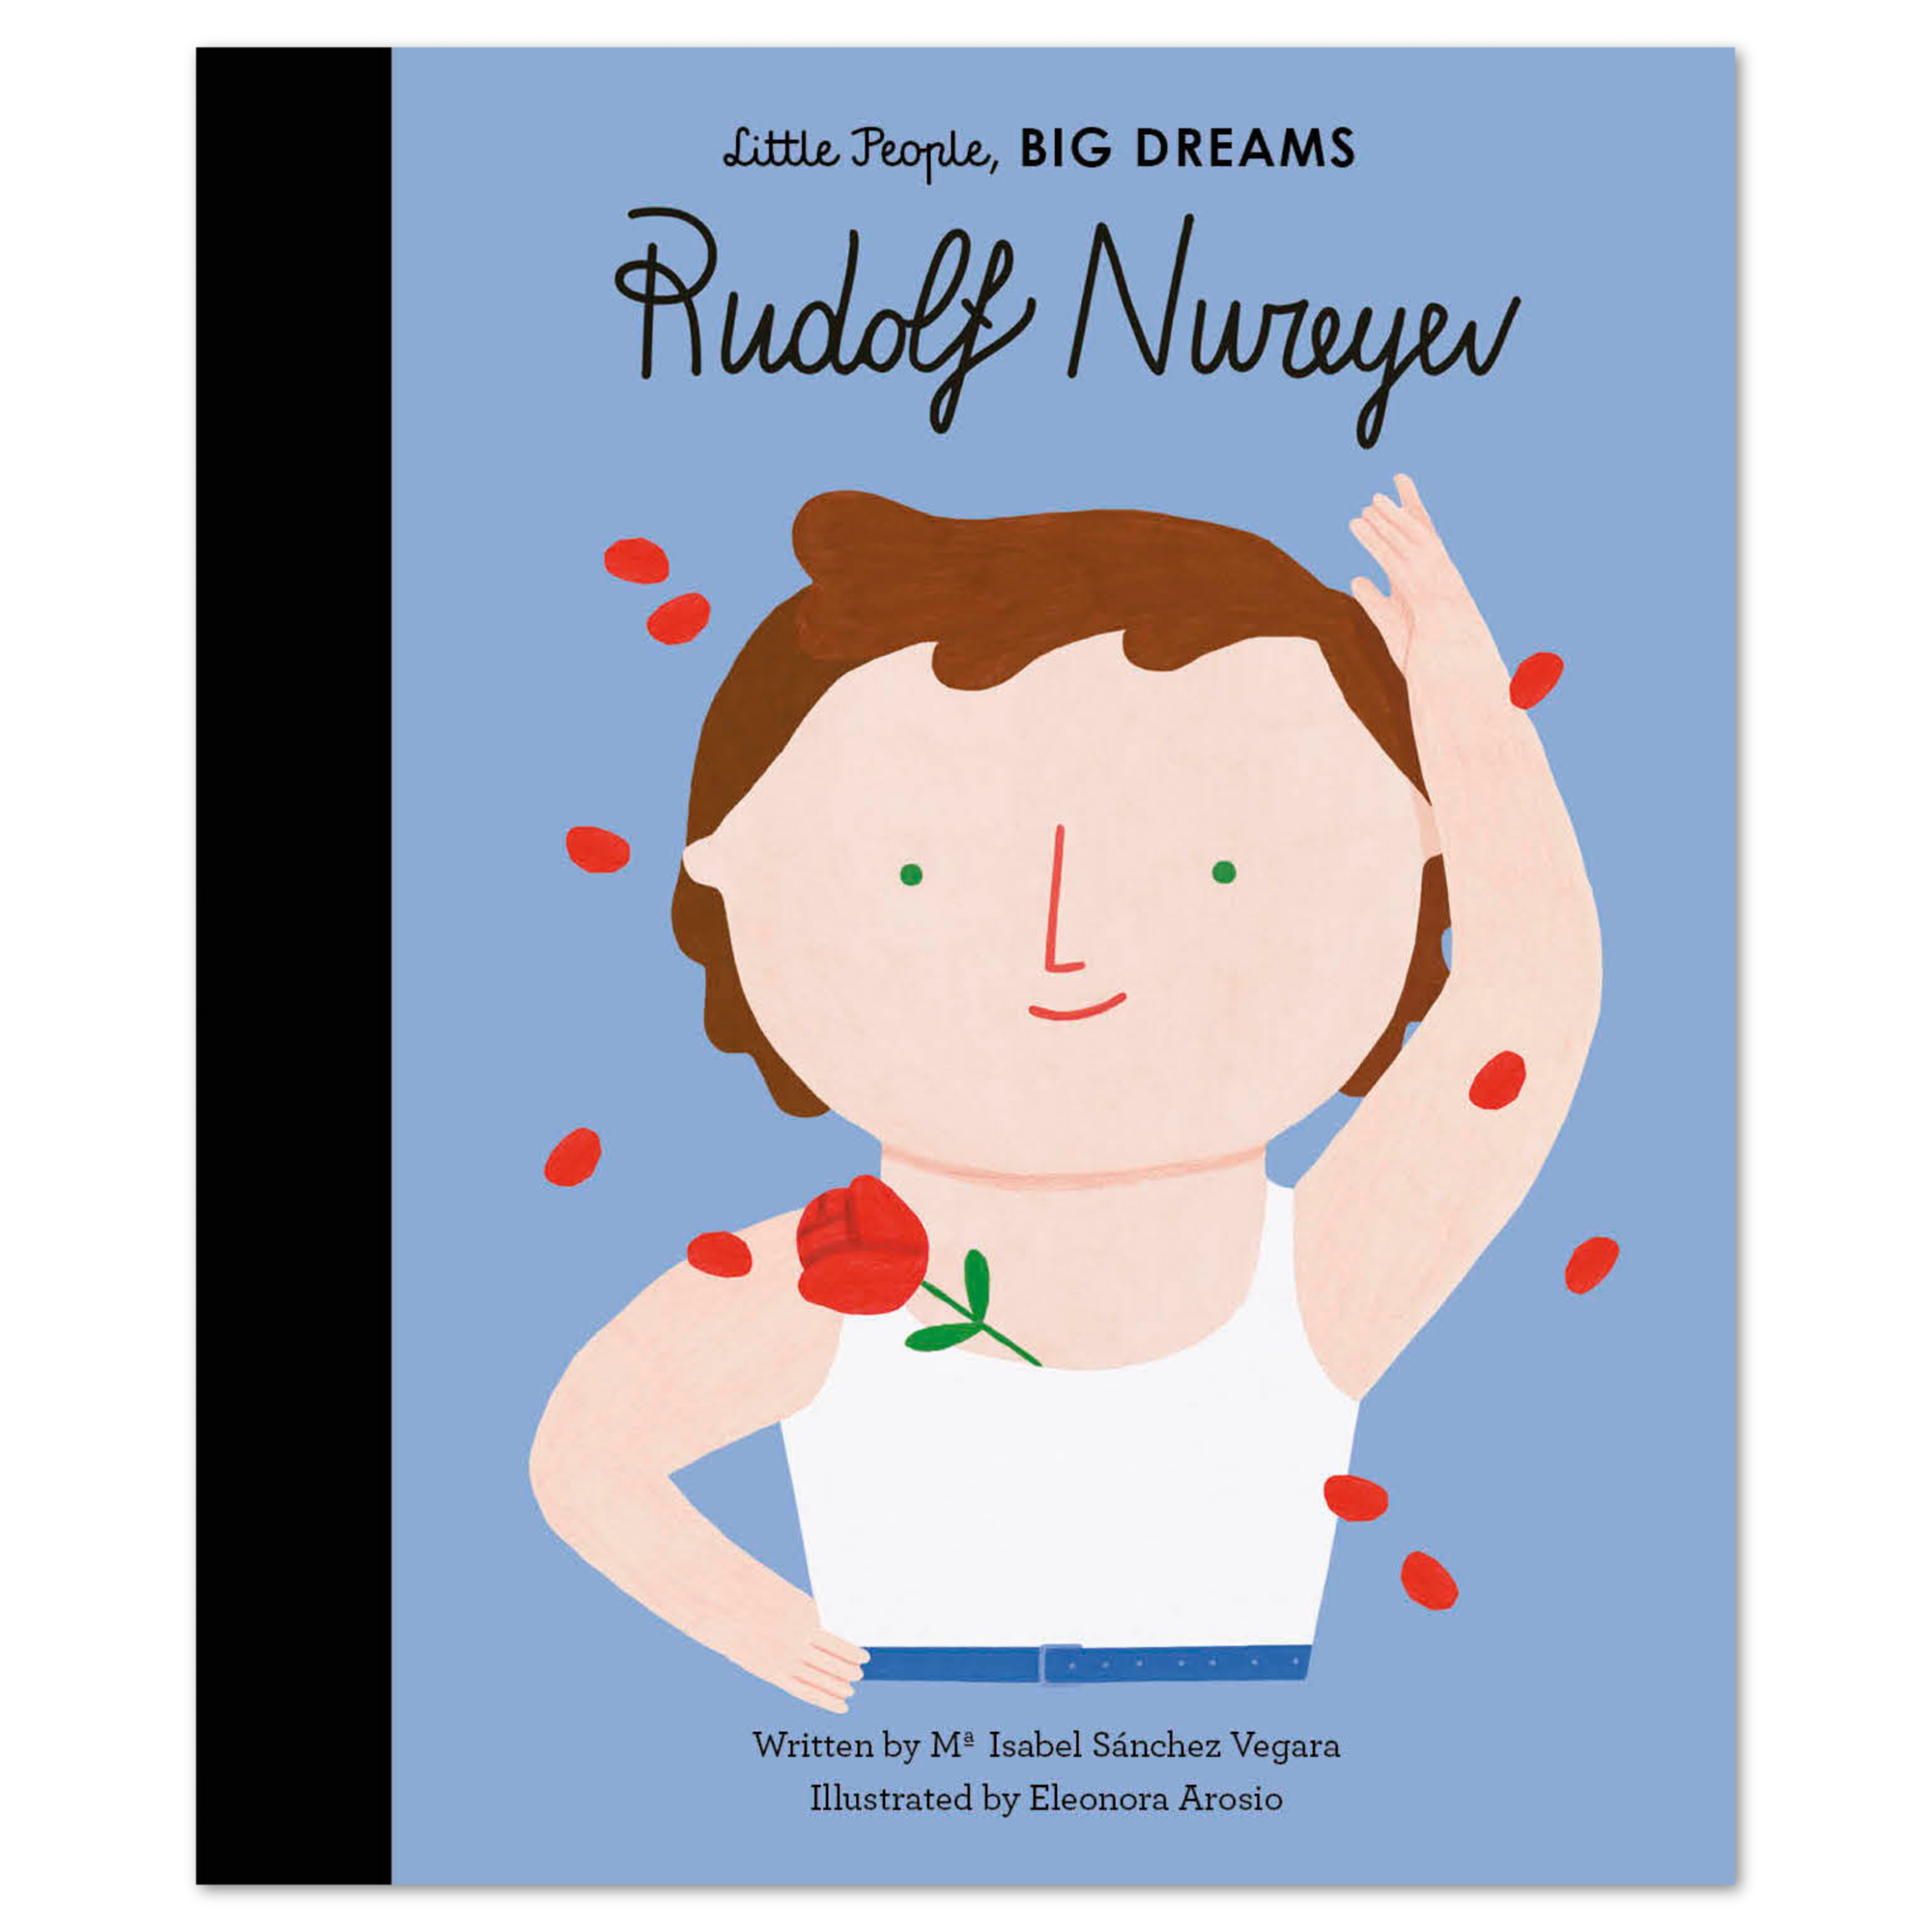 Rudolf Nureyev